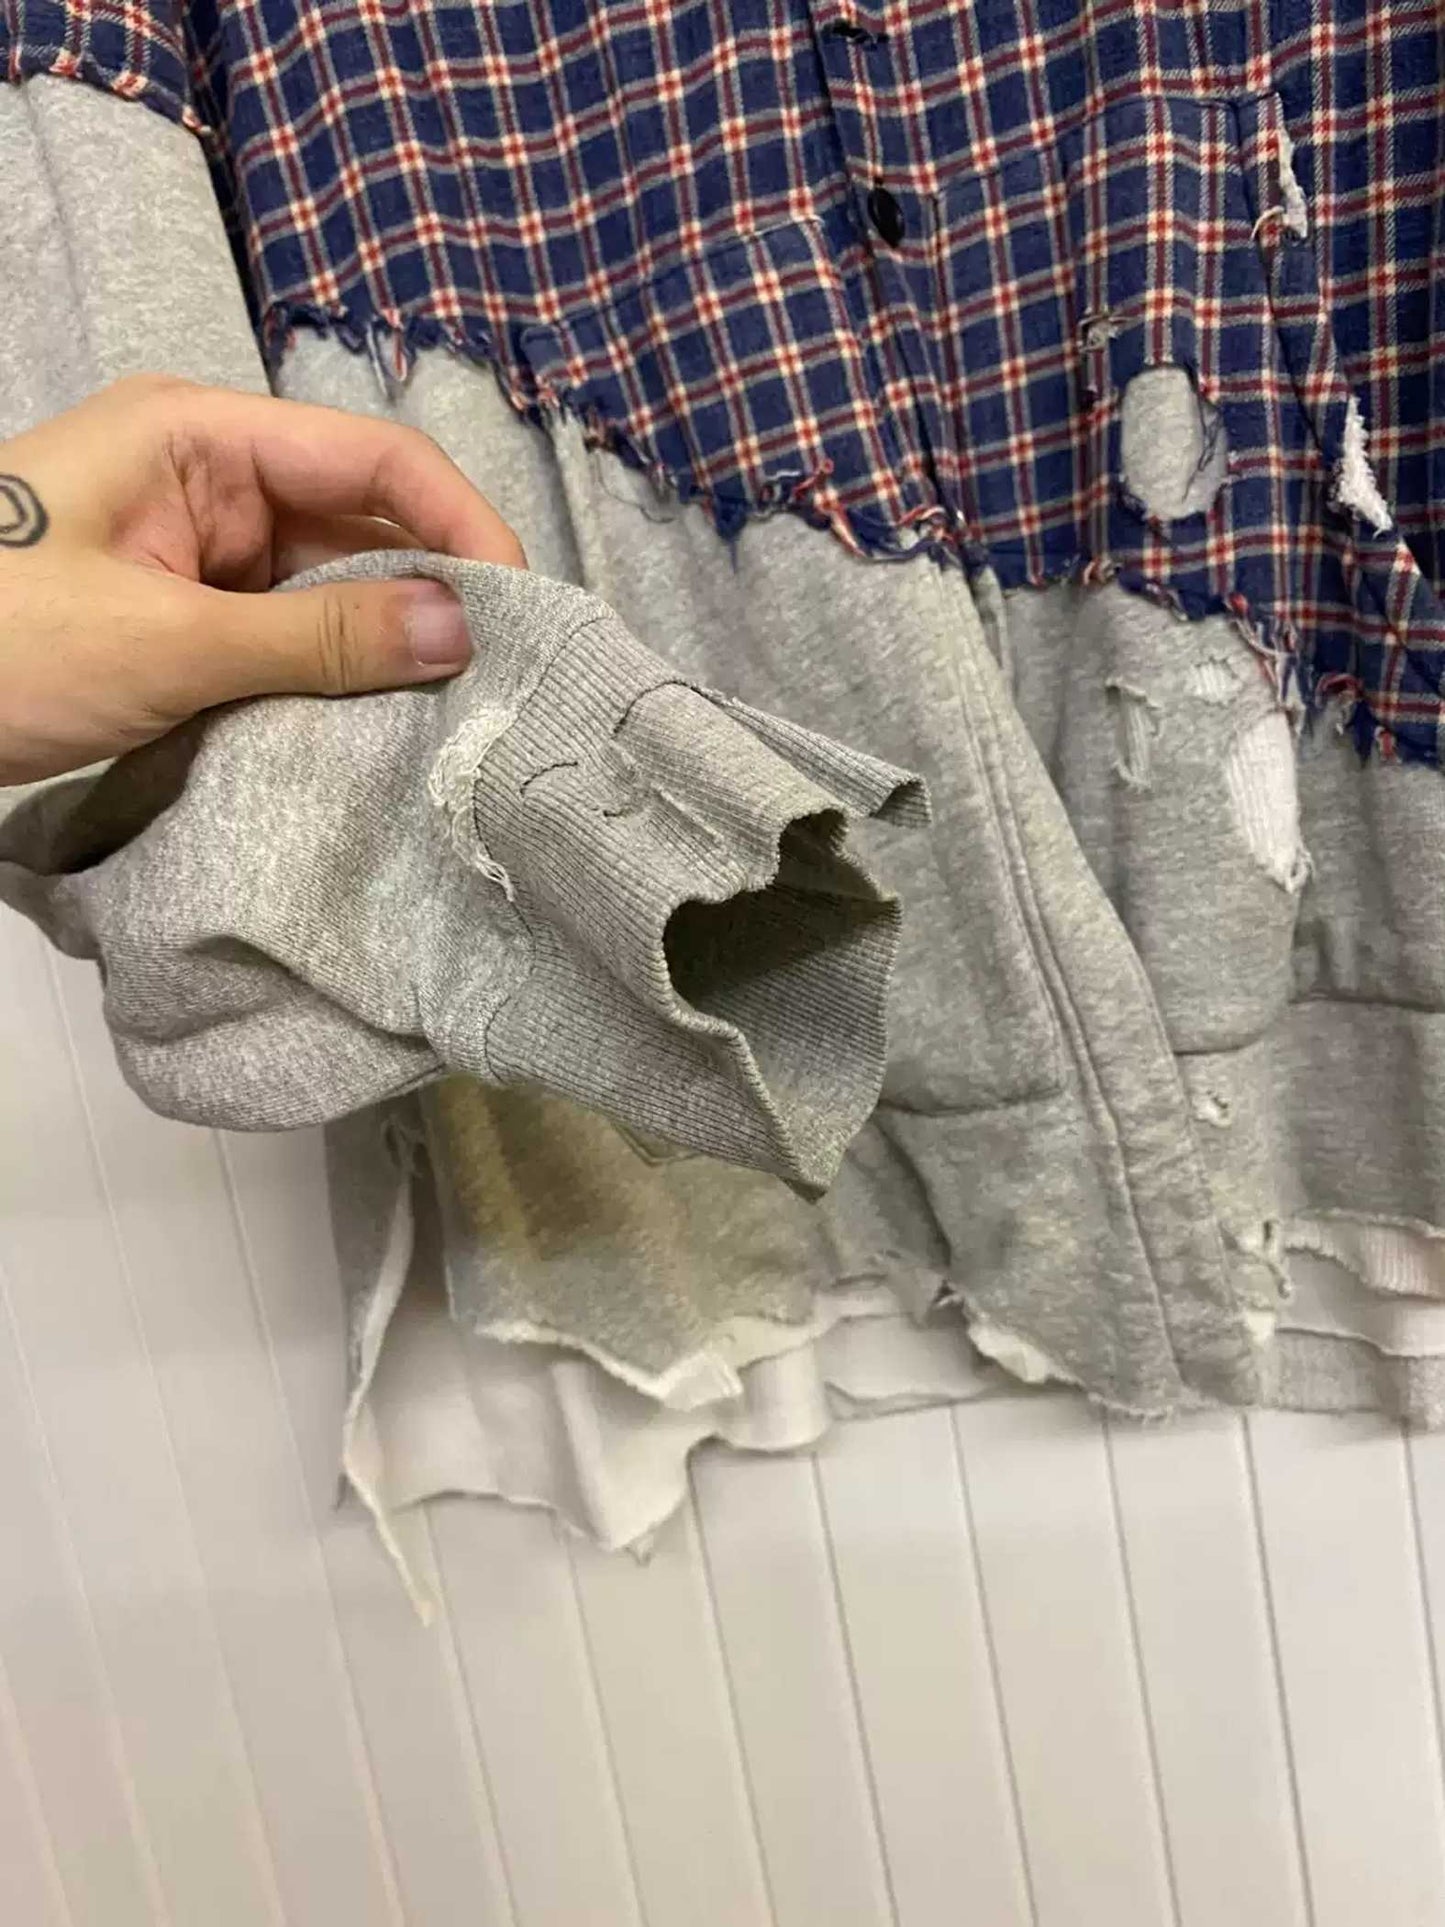 greg lauren 50/50 destroyed shirt